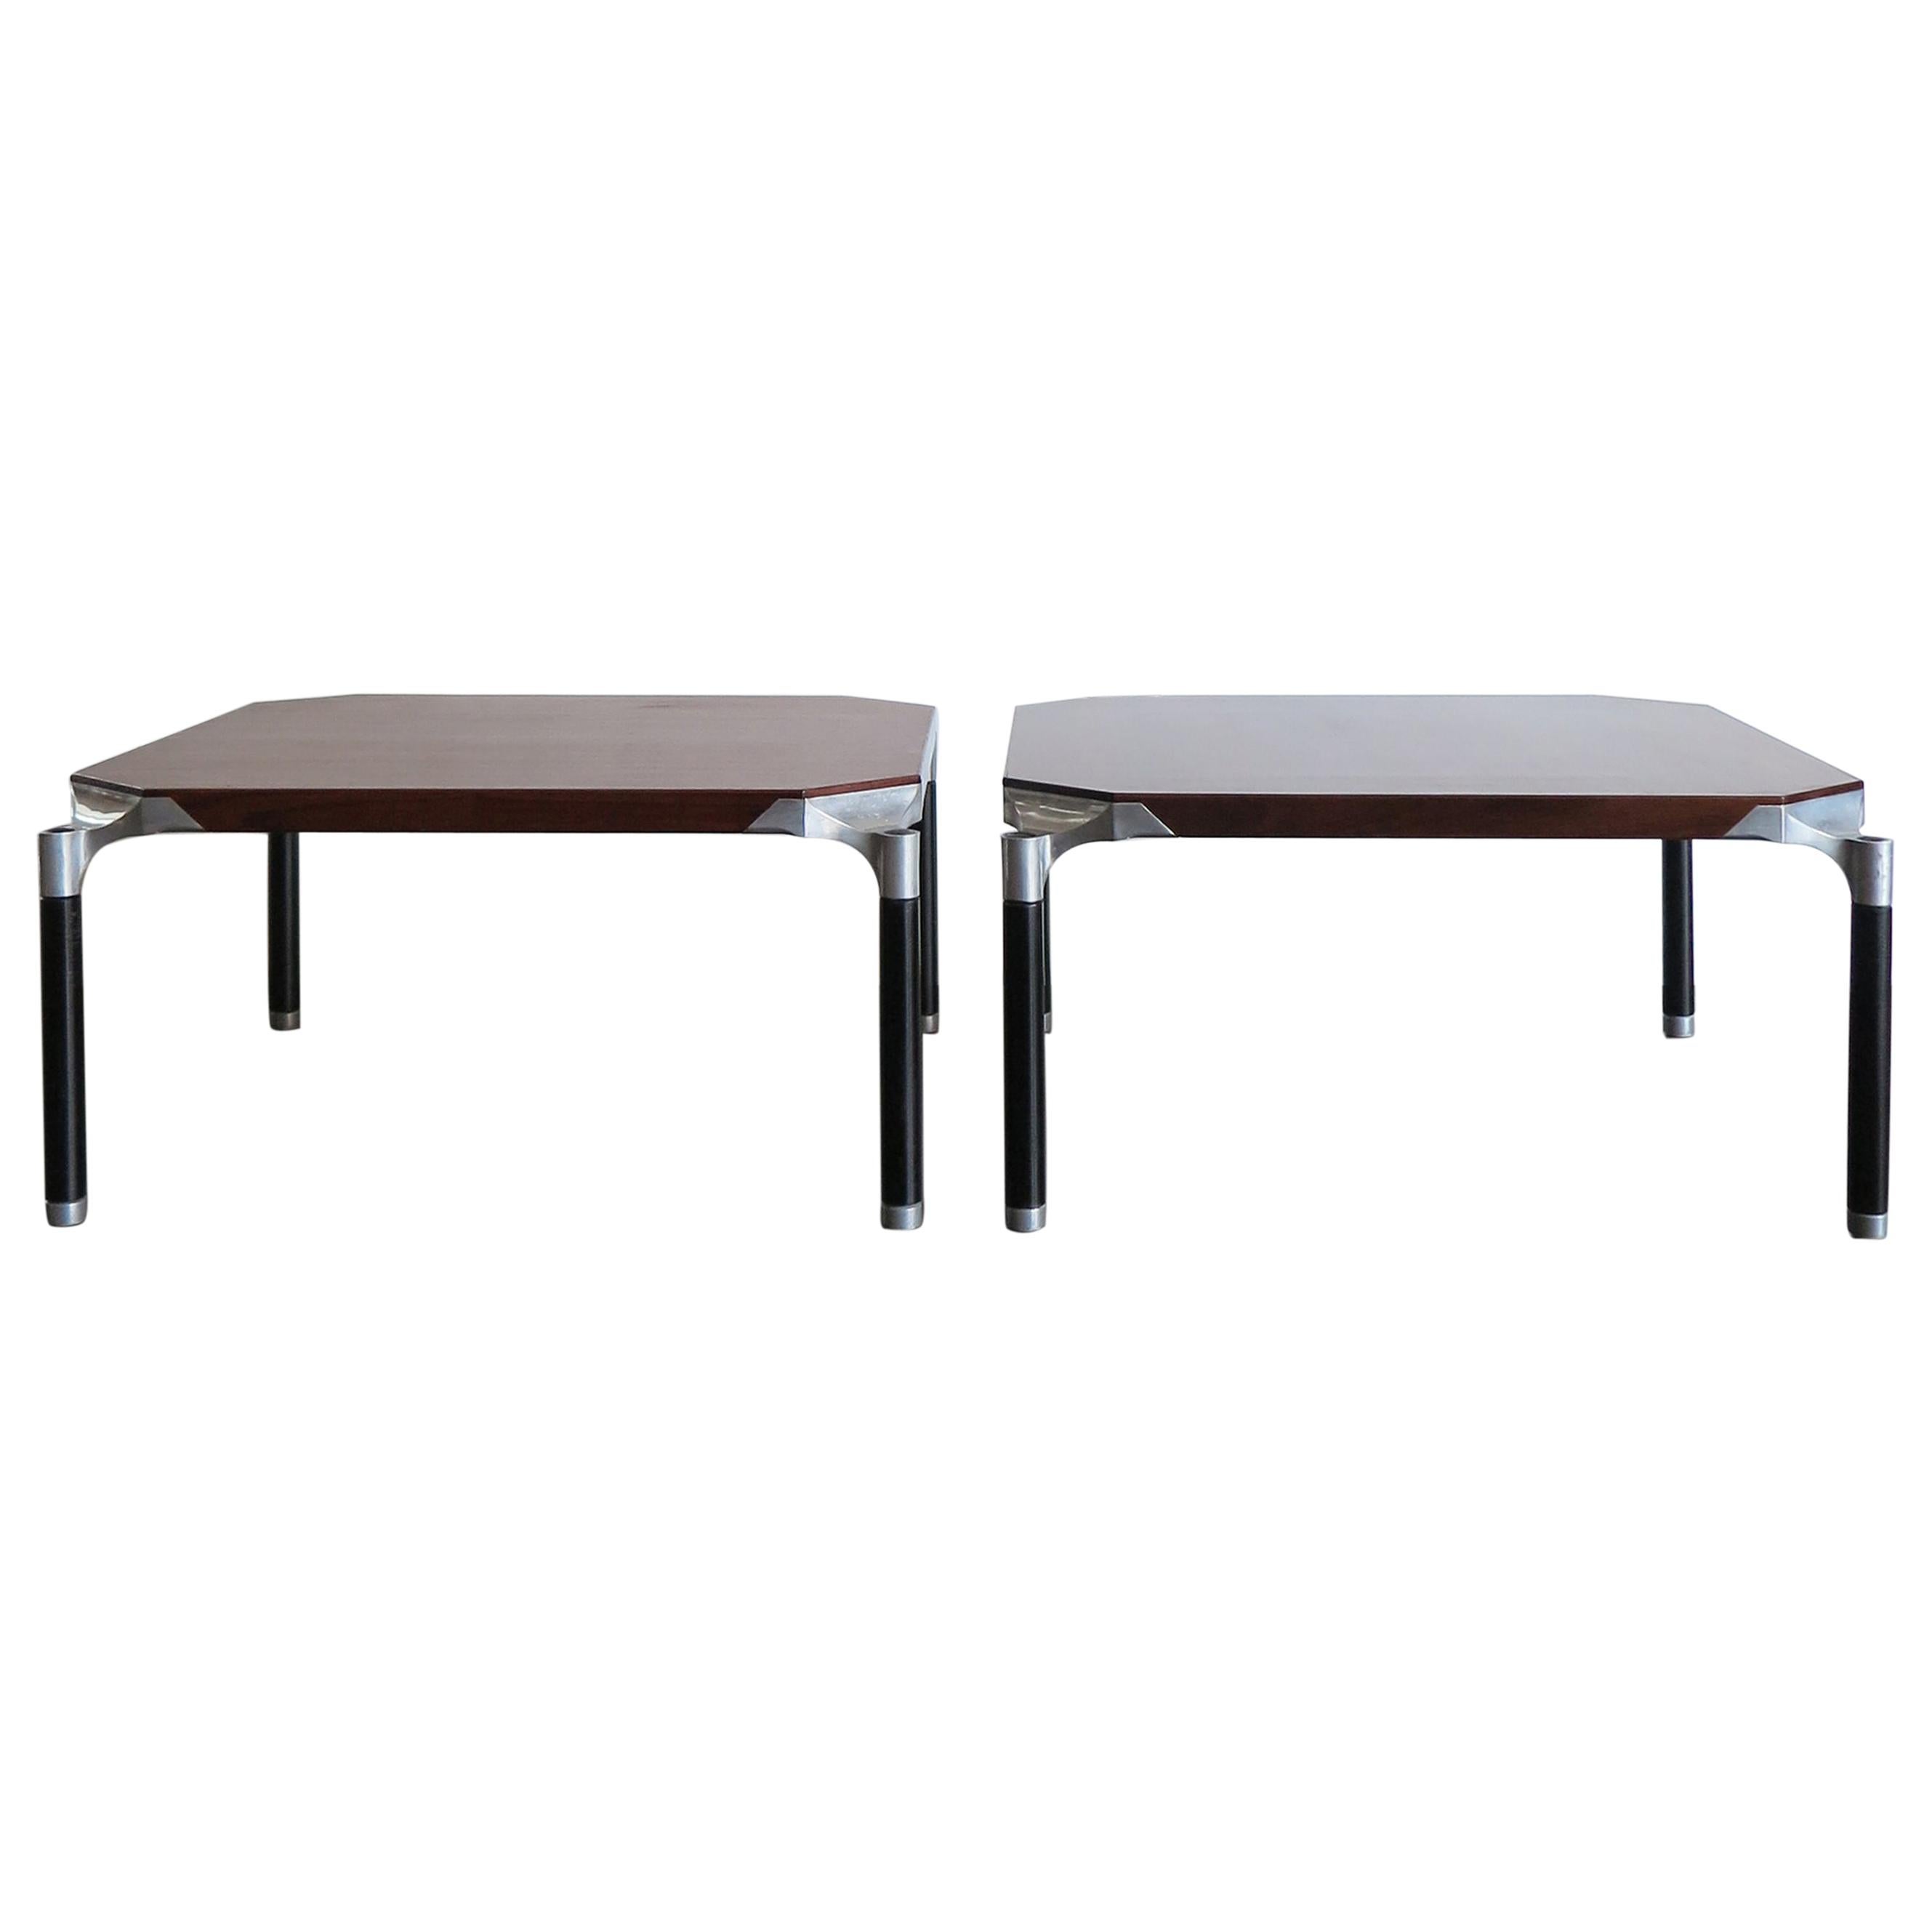 Ico Parisi for Mim Italian Mid-Century Modern Design Wood Sofa Tables, 1960s